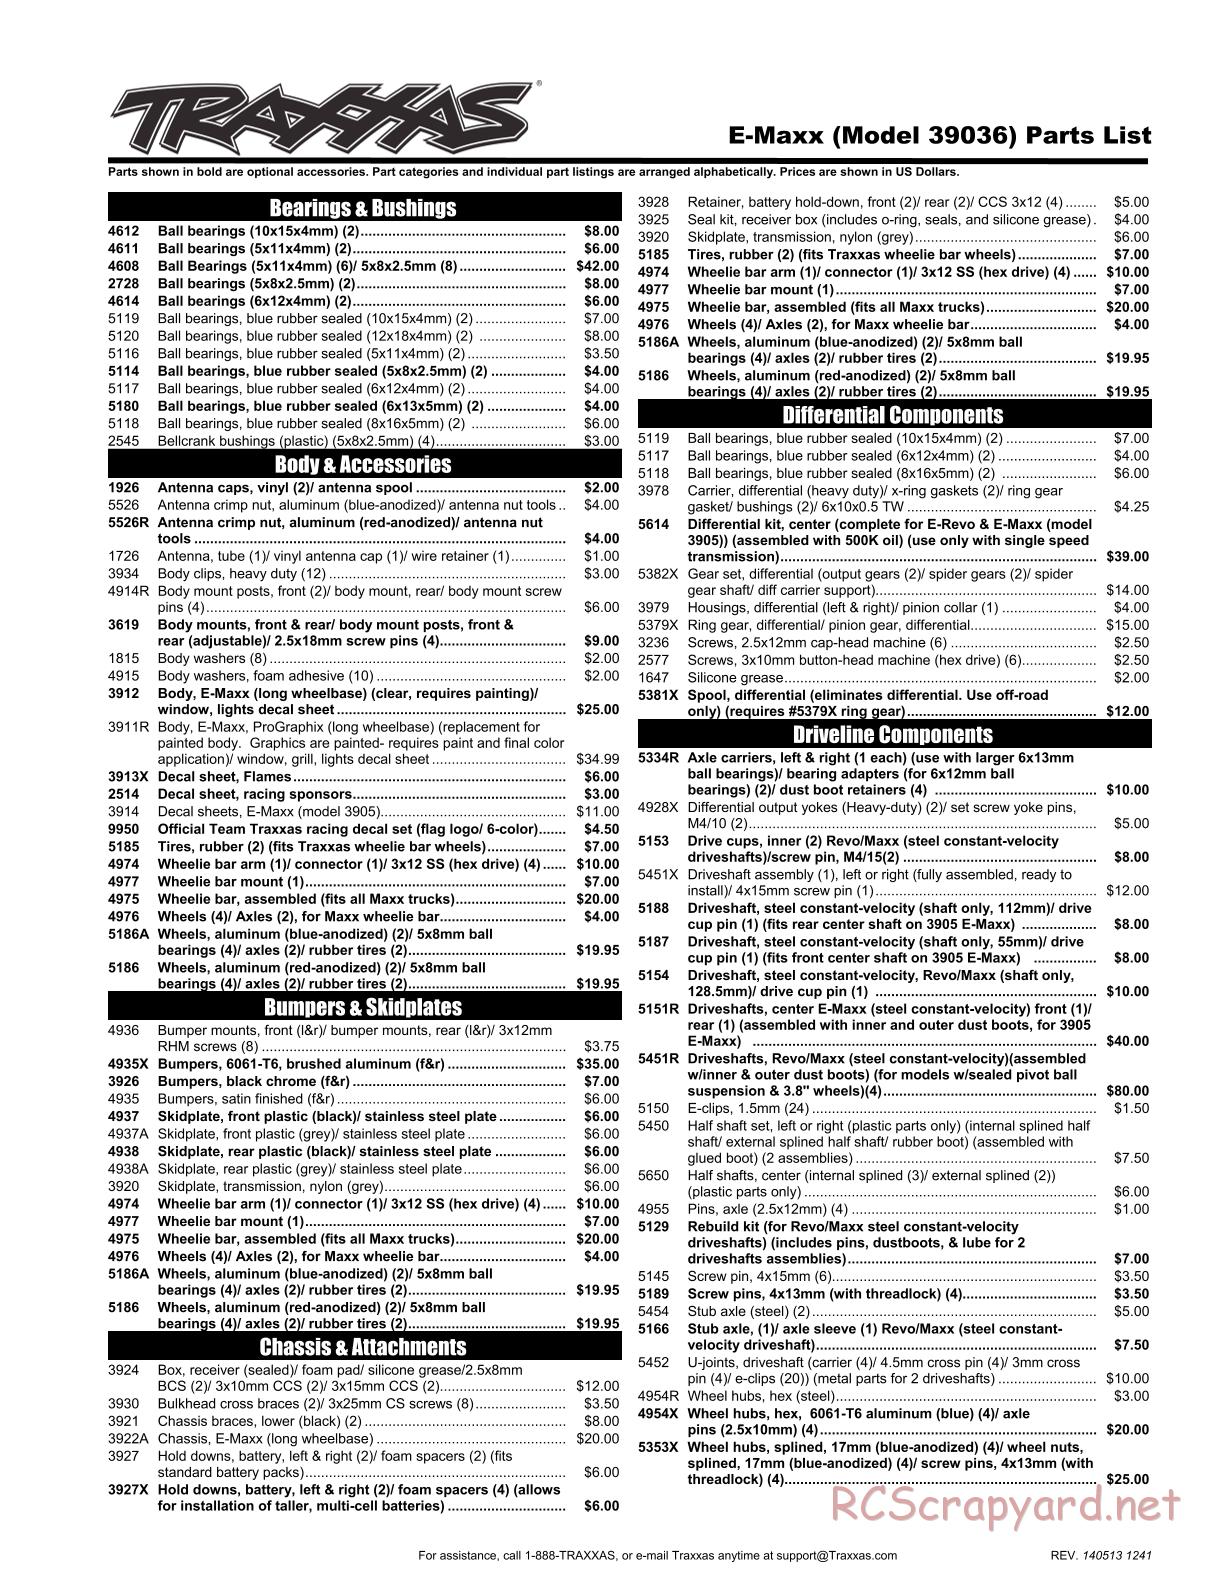 Traxxas - E-Maxx (2014) - Parts List - Page 1